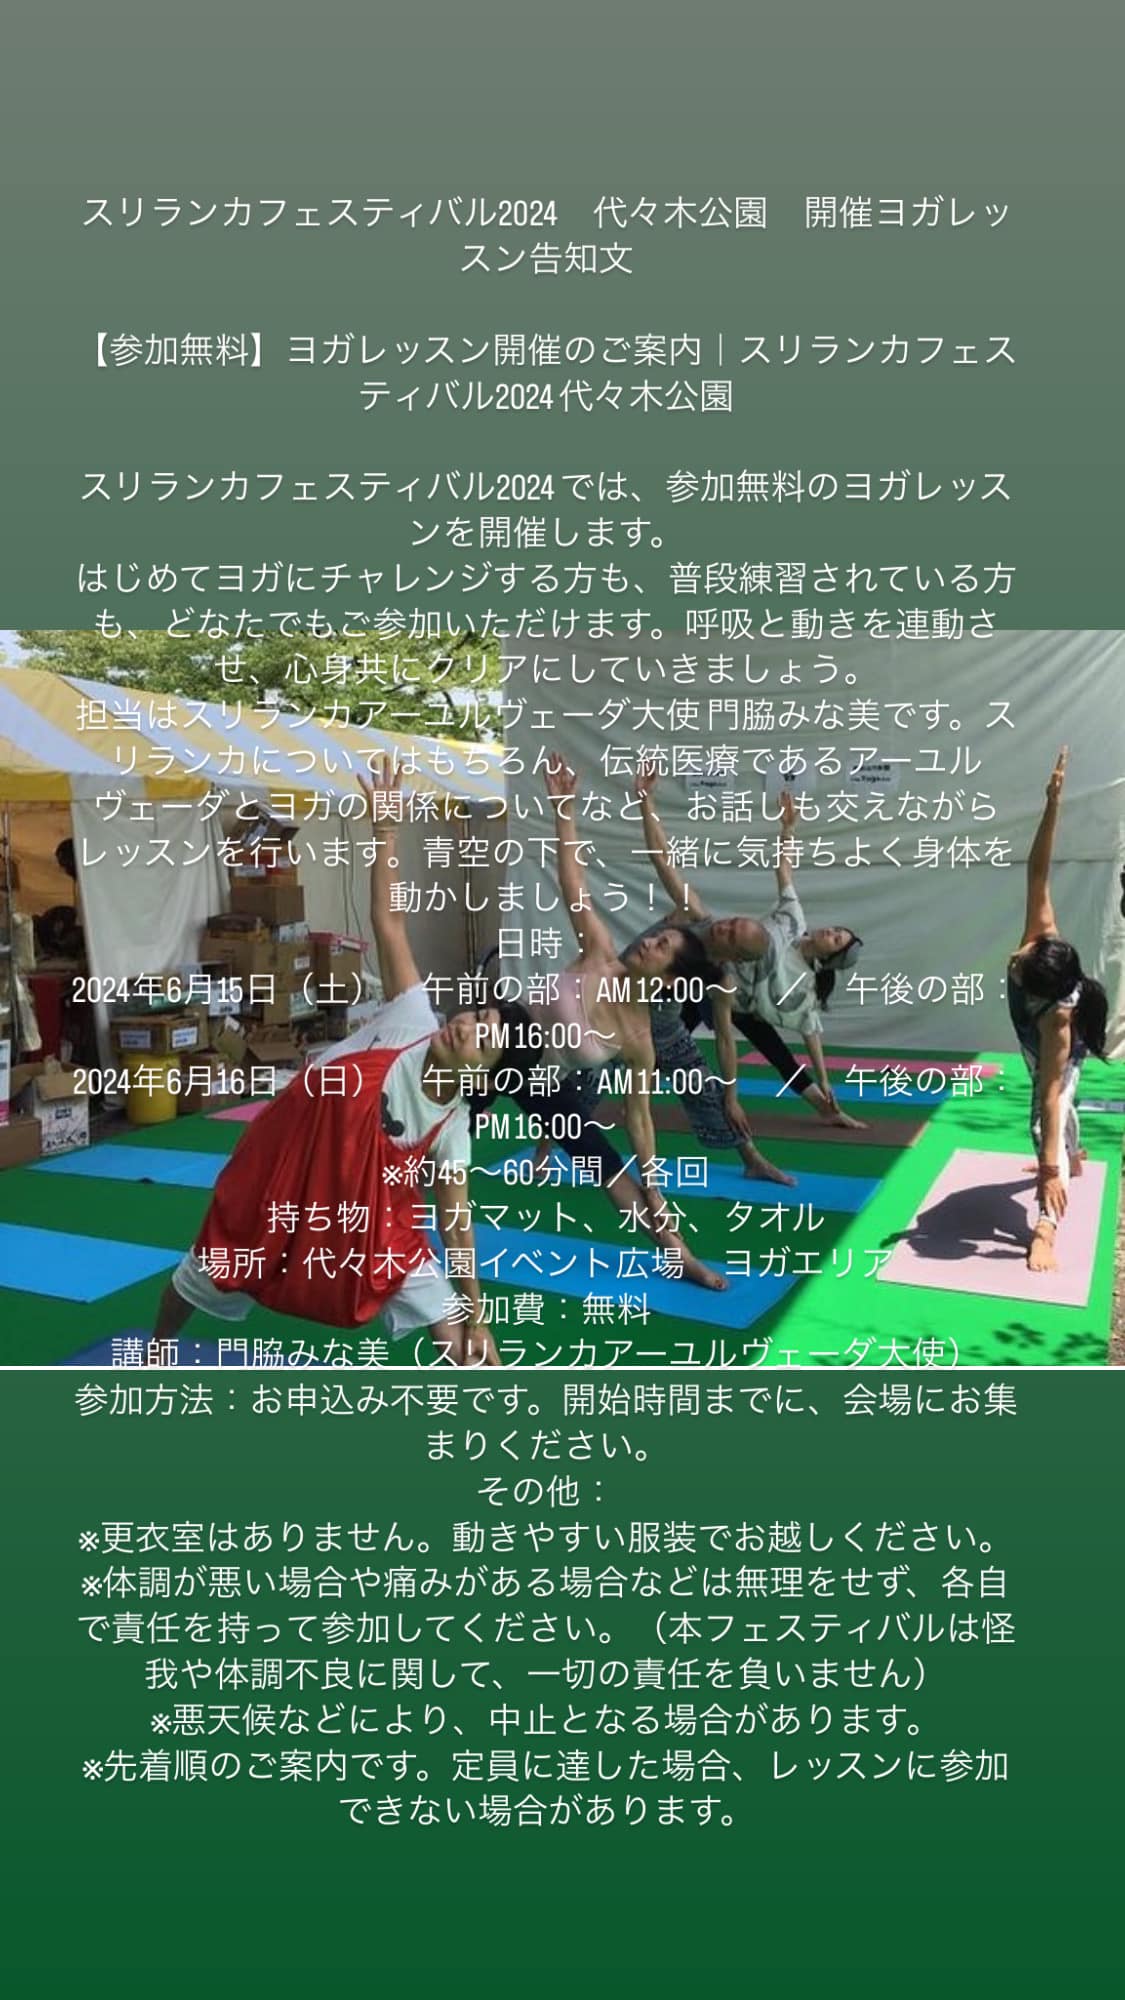 Yoga experience at the Sri Lanka Festival in Japan